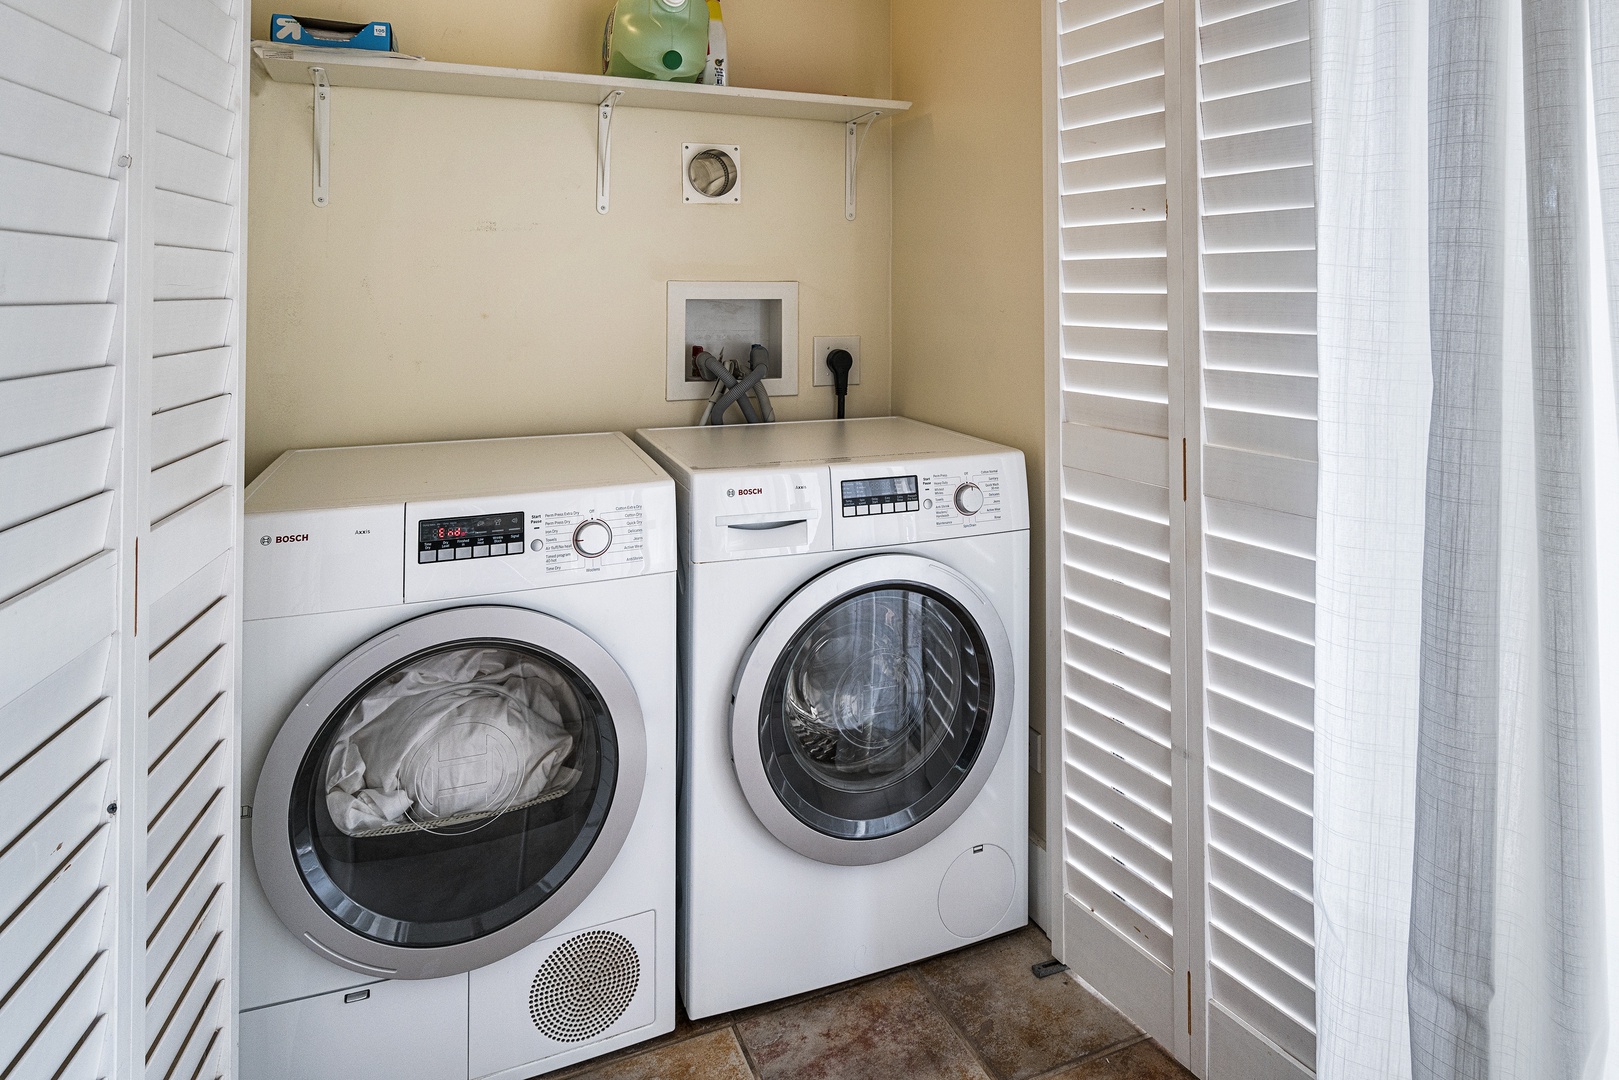 Kailua Kona Vacation Rentals, Kona Plaza 201 - Full sized washer / dryer in this unit!